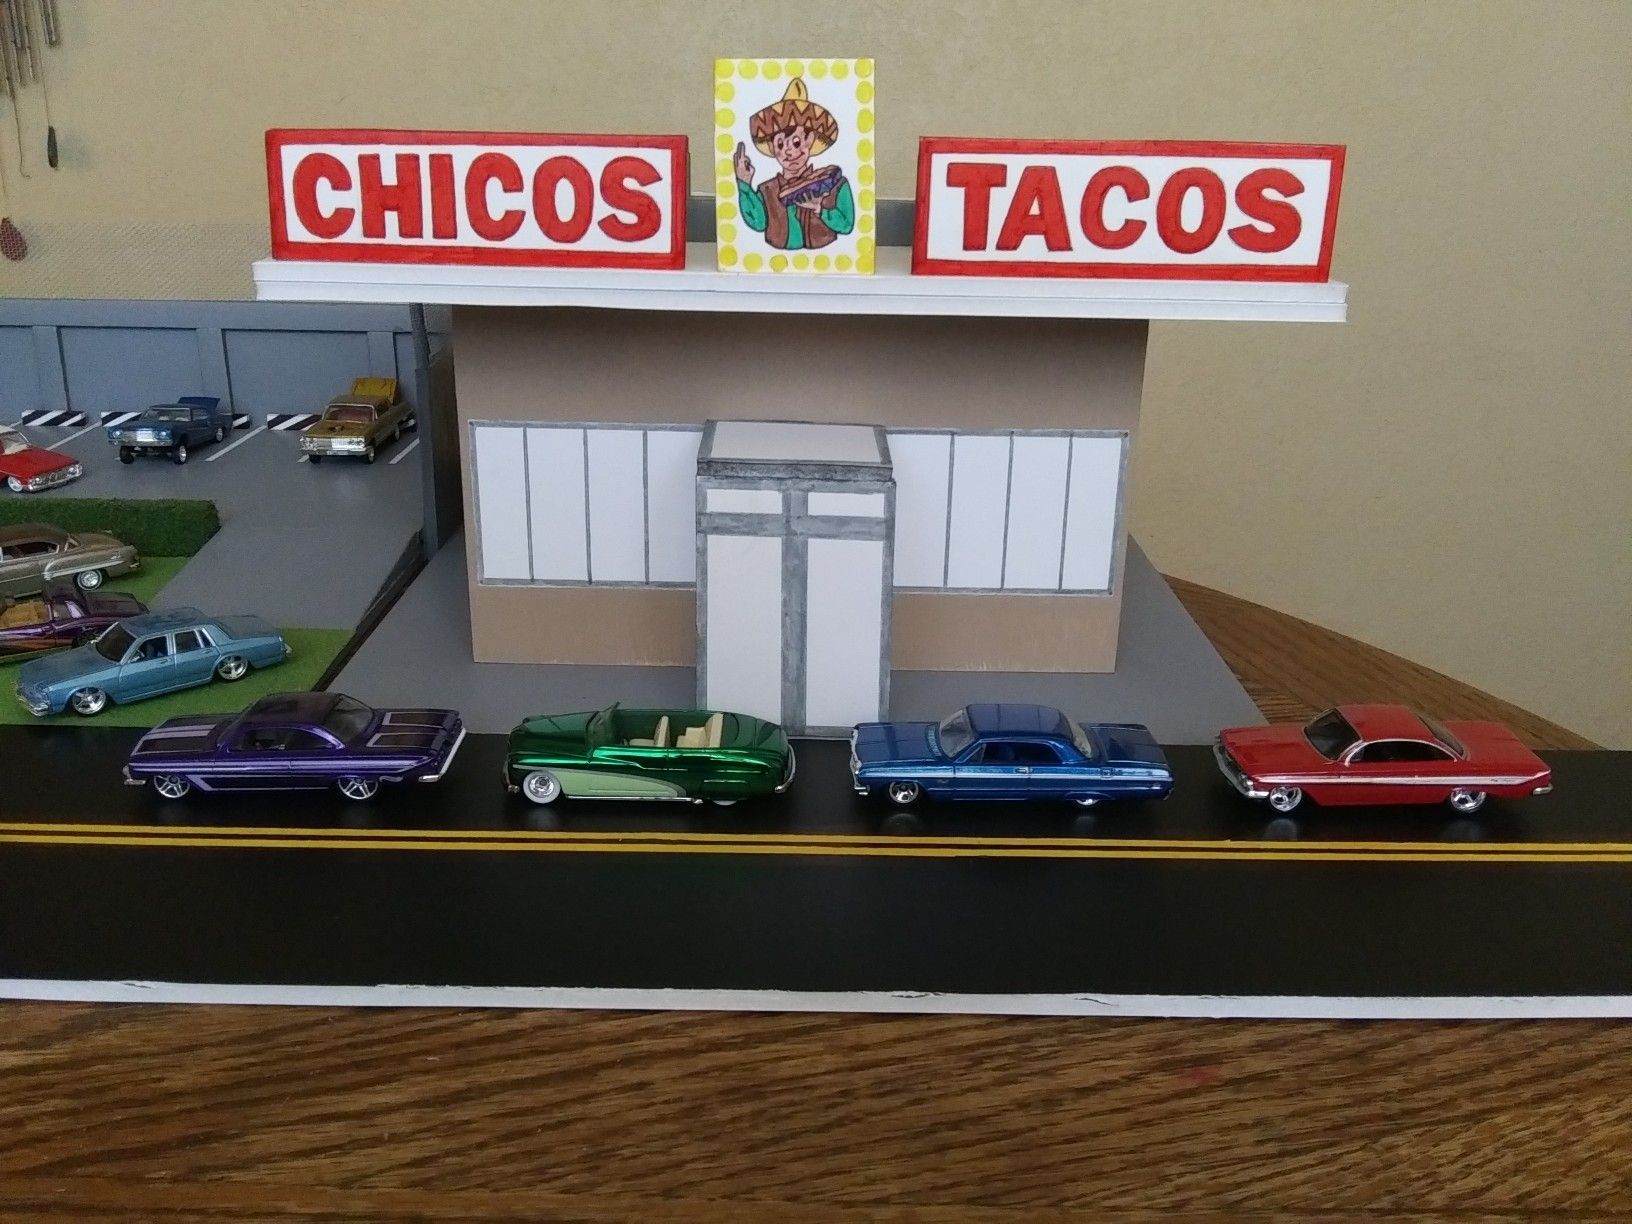 Chicos Tacos restaurant also parking lot.